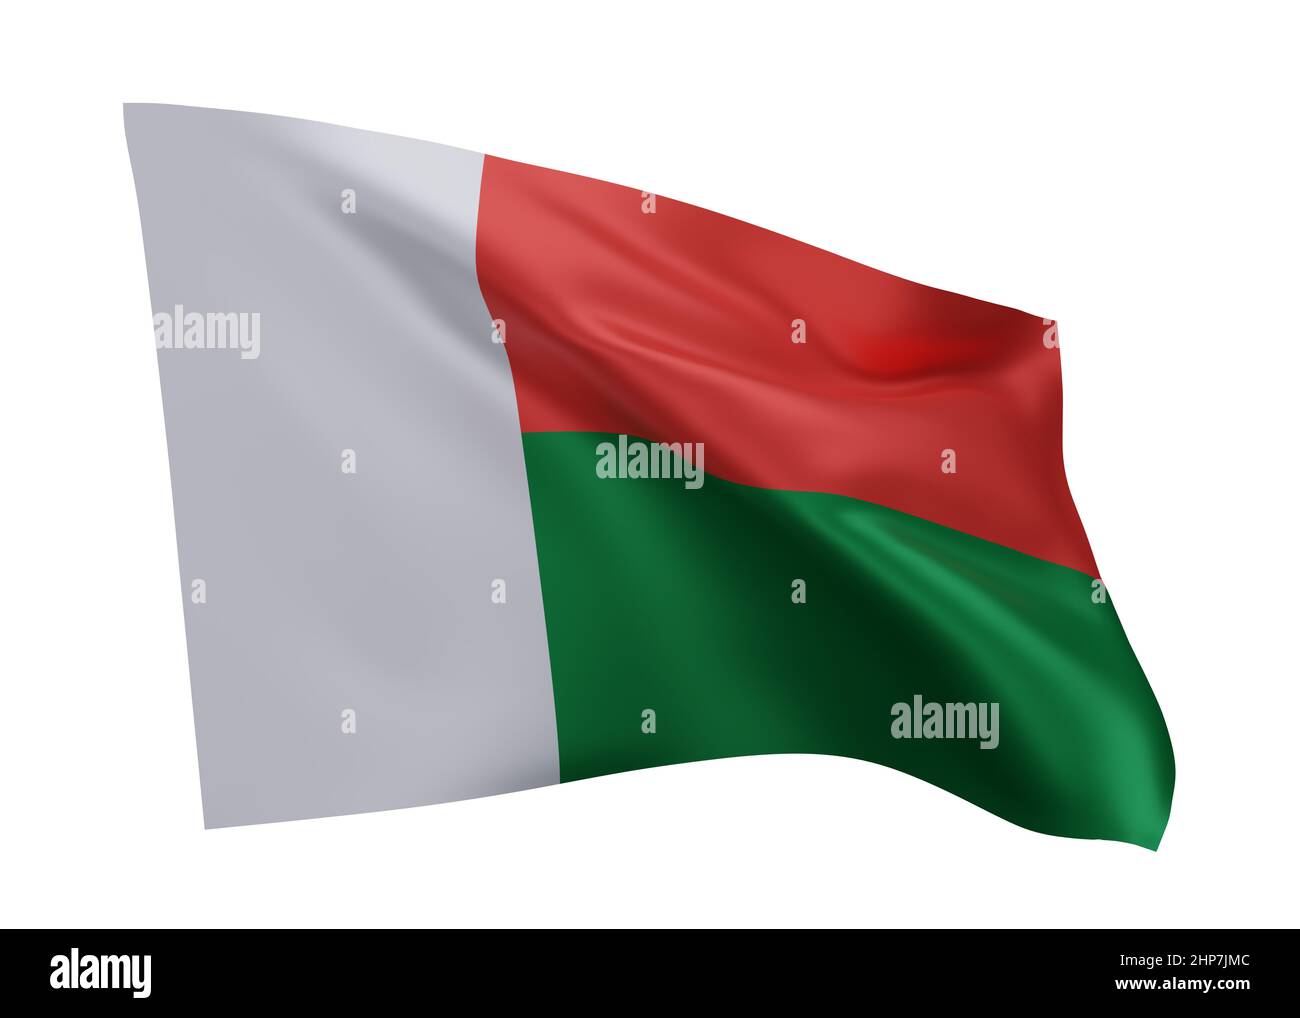 3d illustration flag of Madagascar. Madagascar high resolution flag isolated against white background. 3d rendering Stock Photo